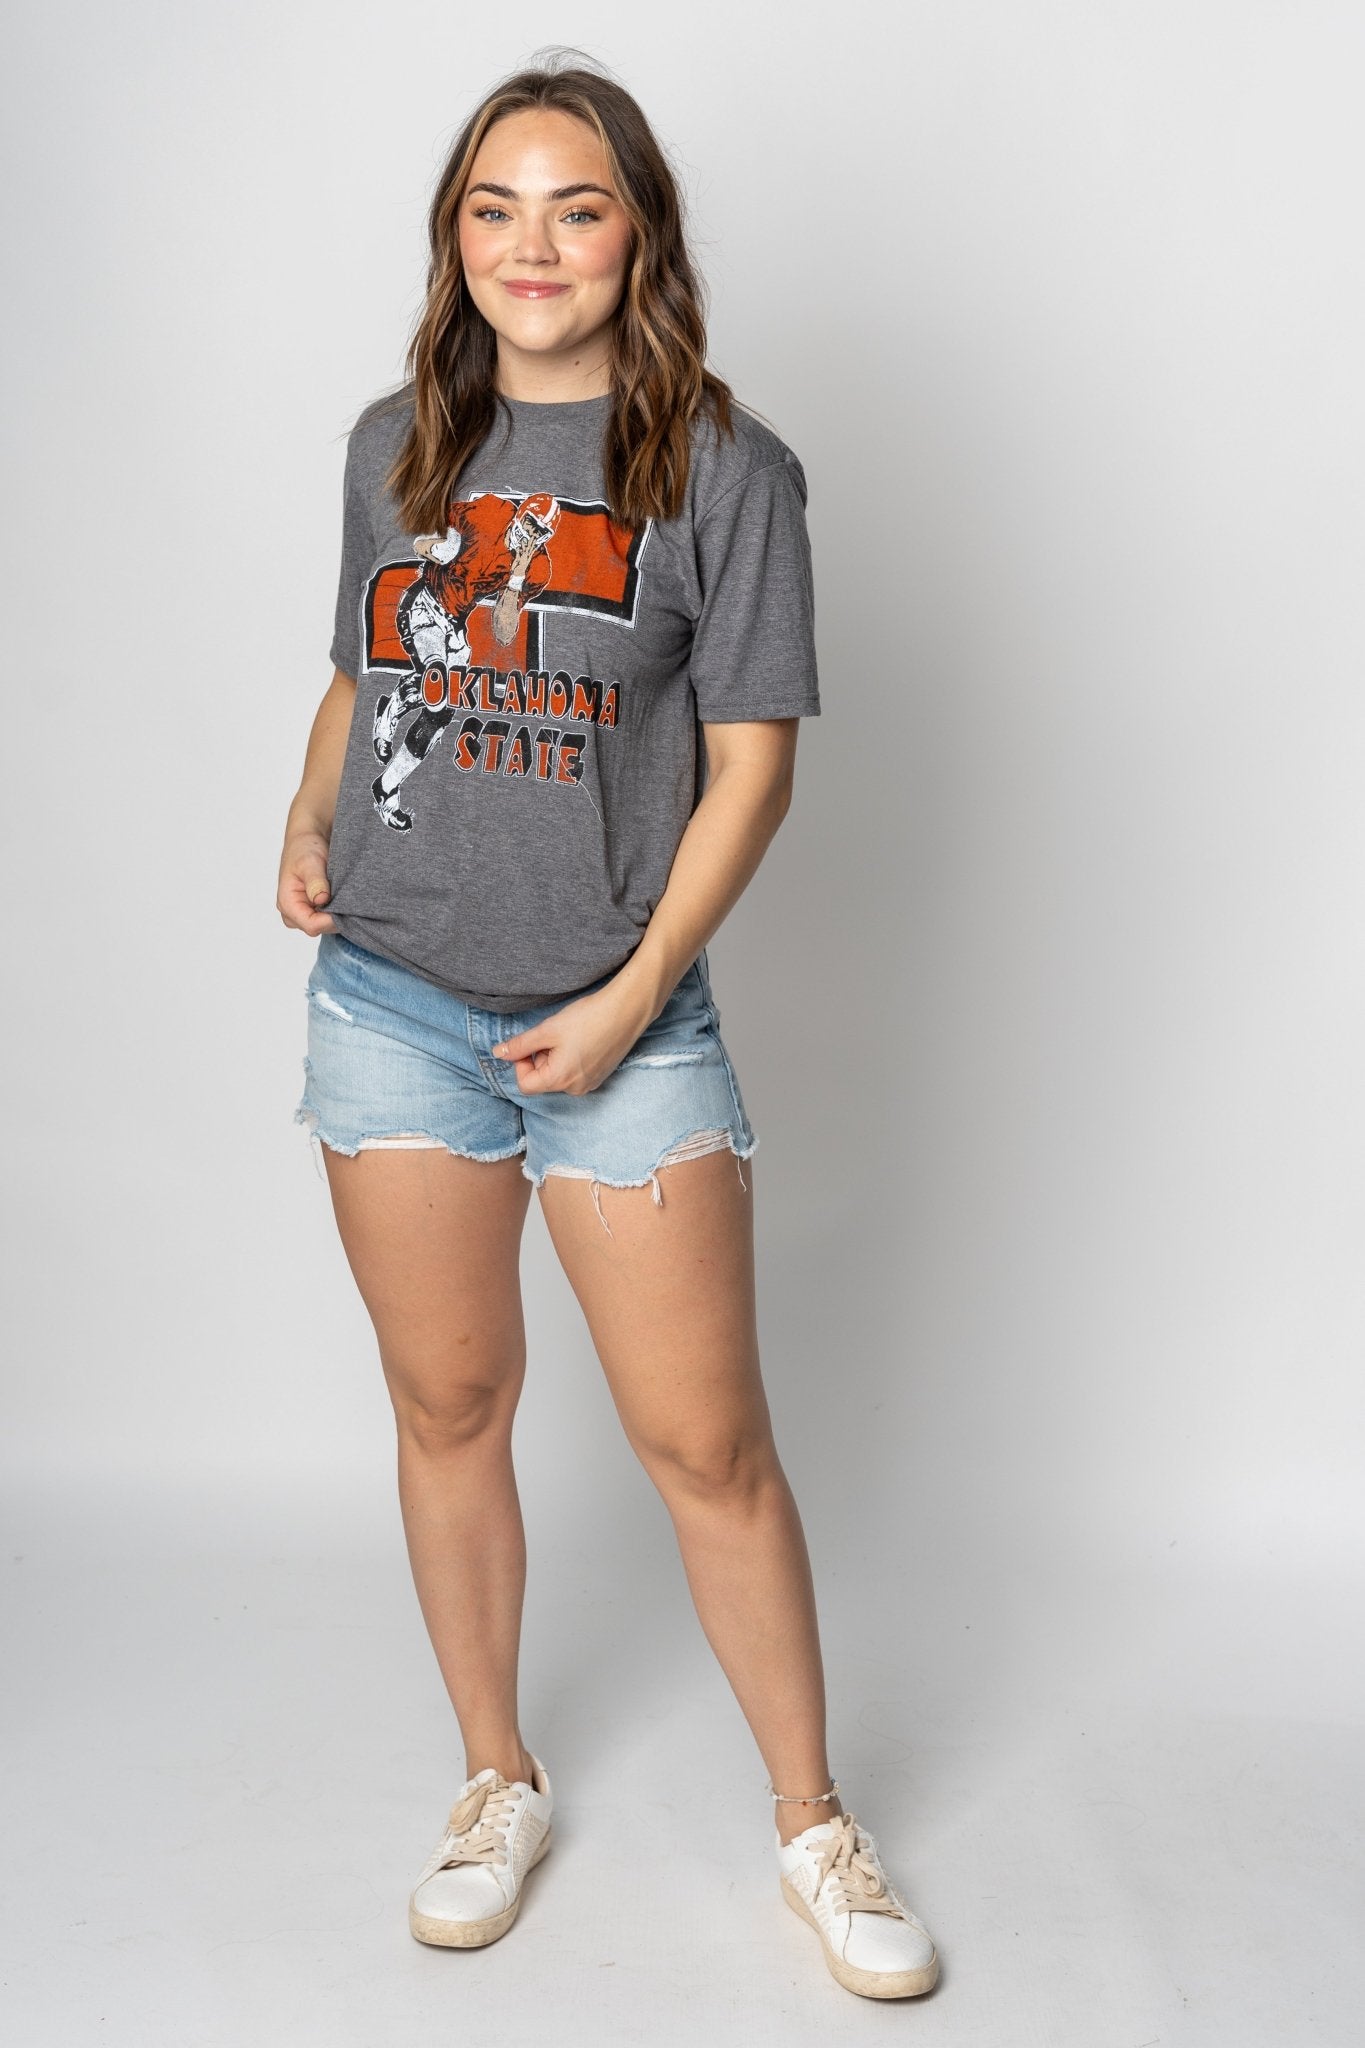 OSU OSU running player unisex t-shirt grey T-shirts | Lush Fashion Lounge Trendy Oklahoma State Cowboys Apparel & Cute Gameday T-Shirts